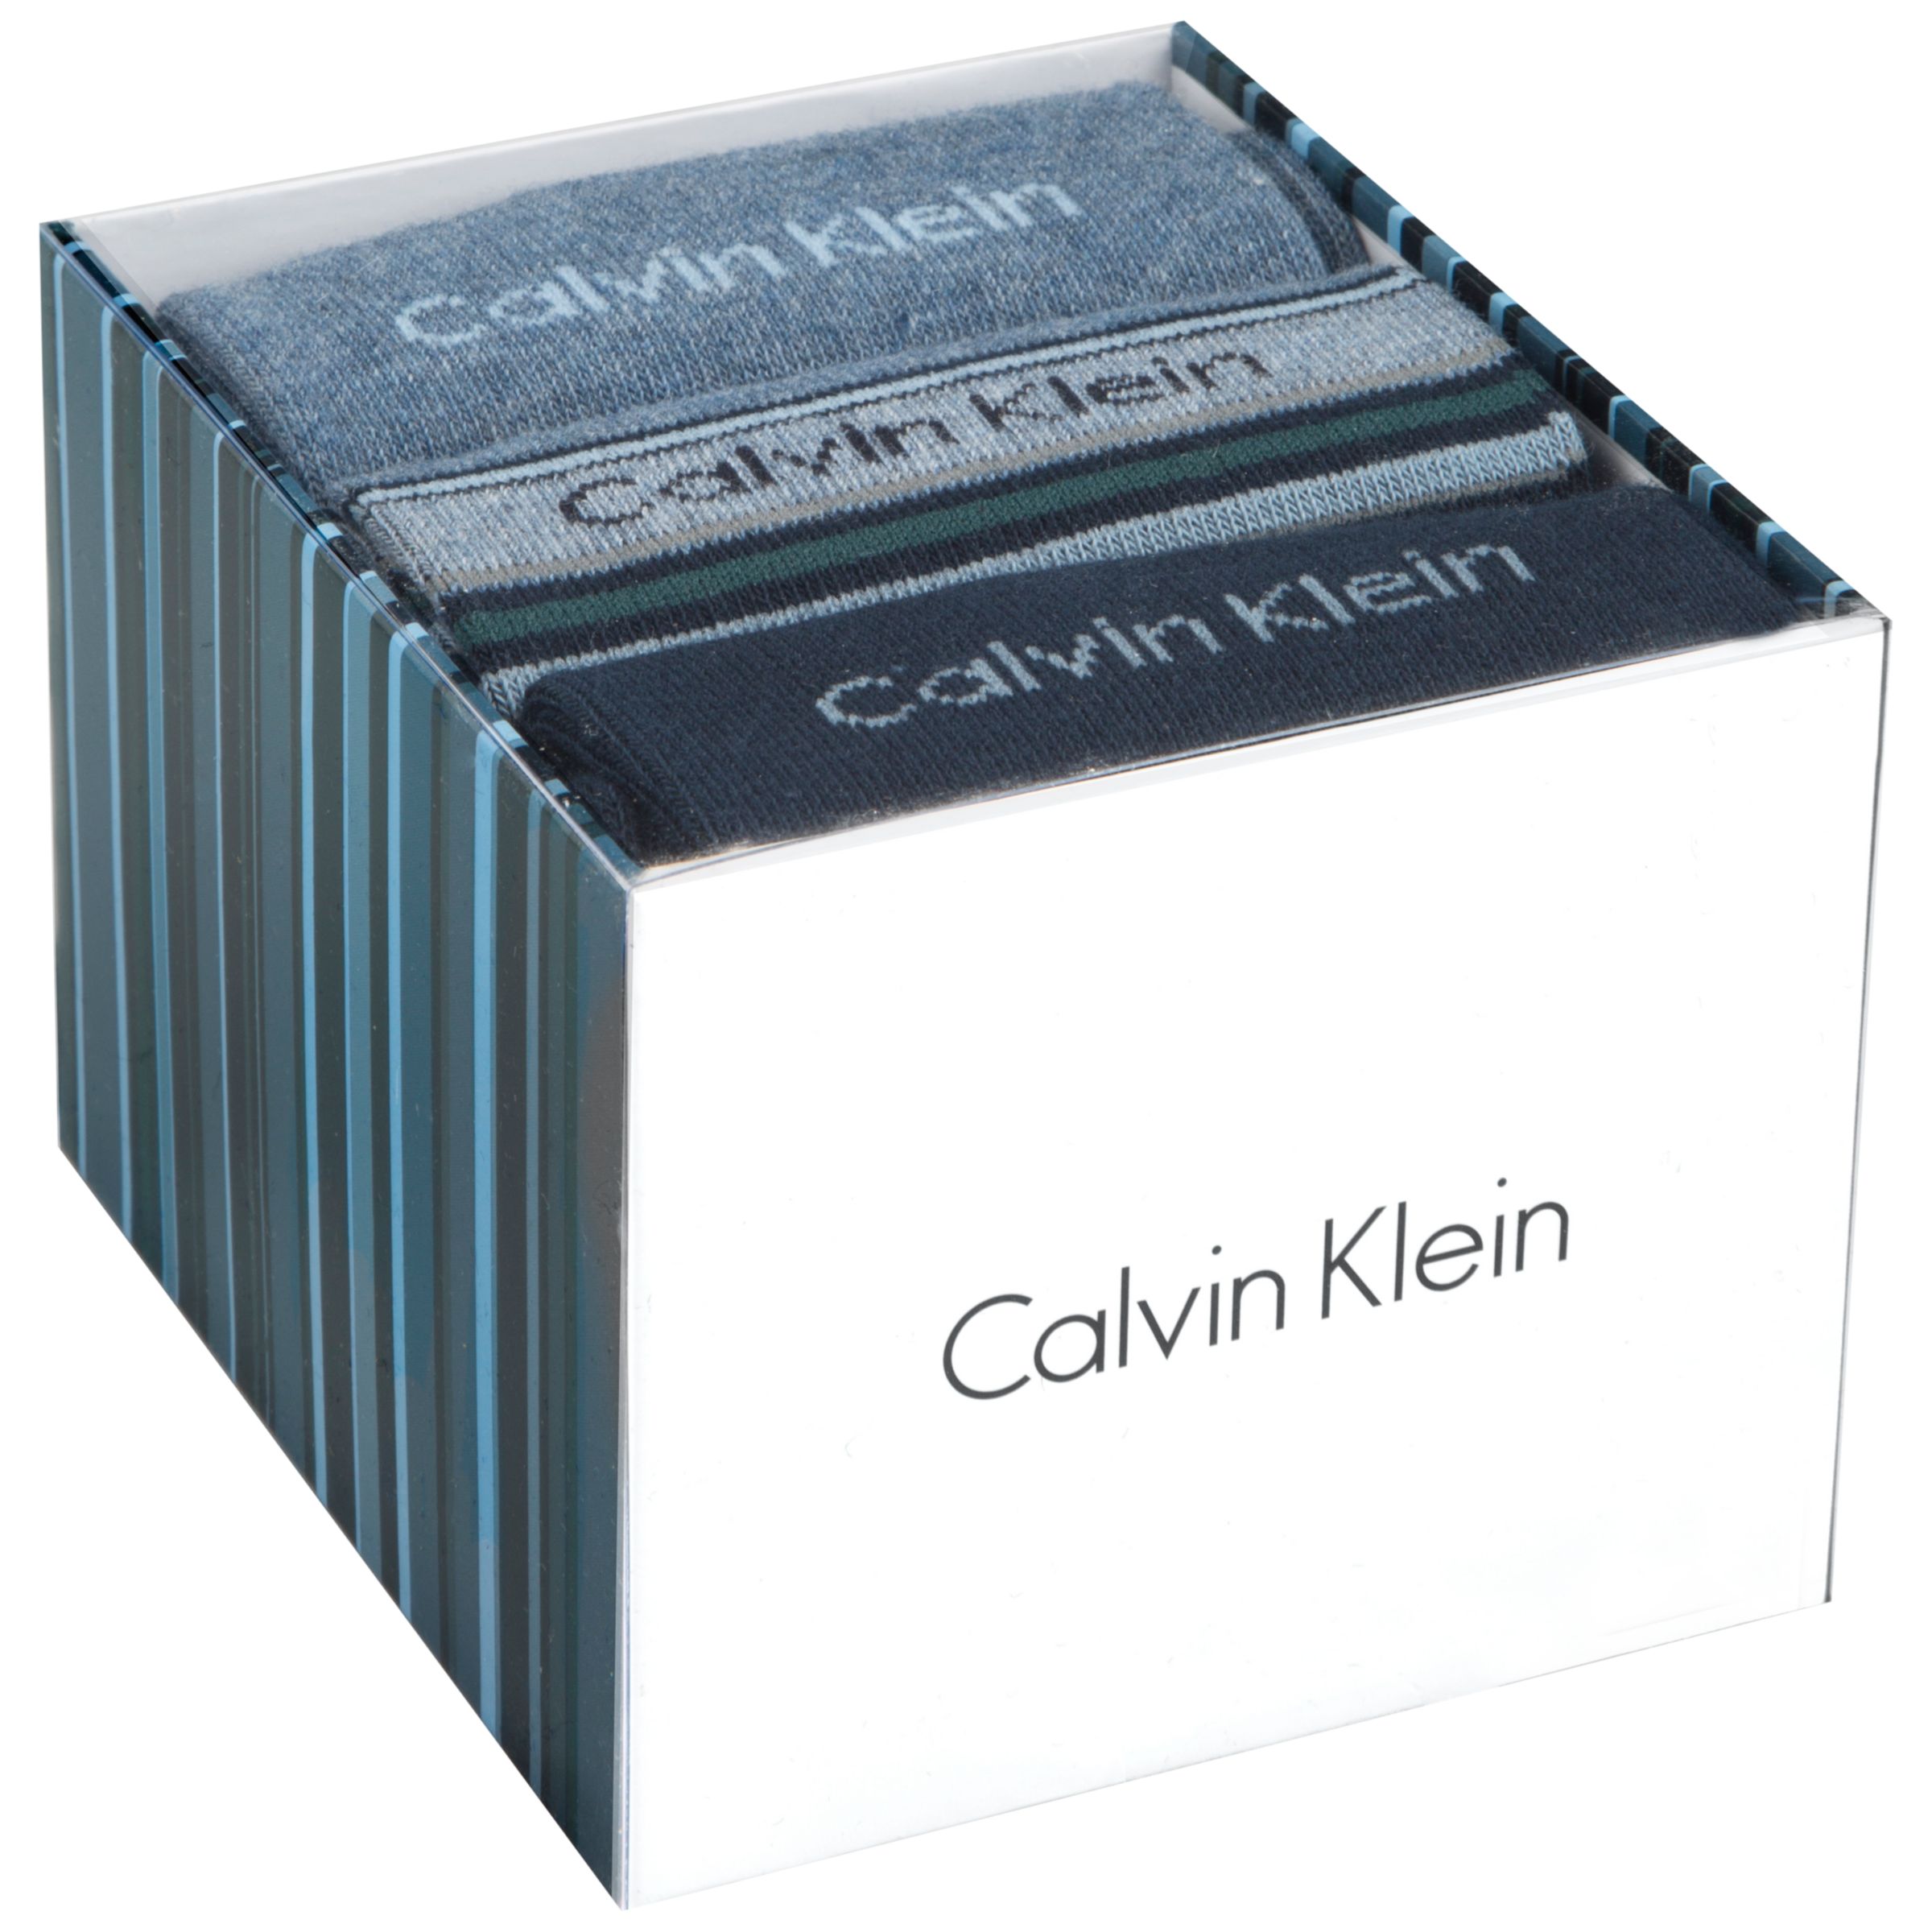 Calvin Klein Stripe Sock Gift Box Reviews